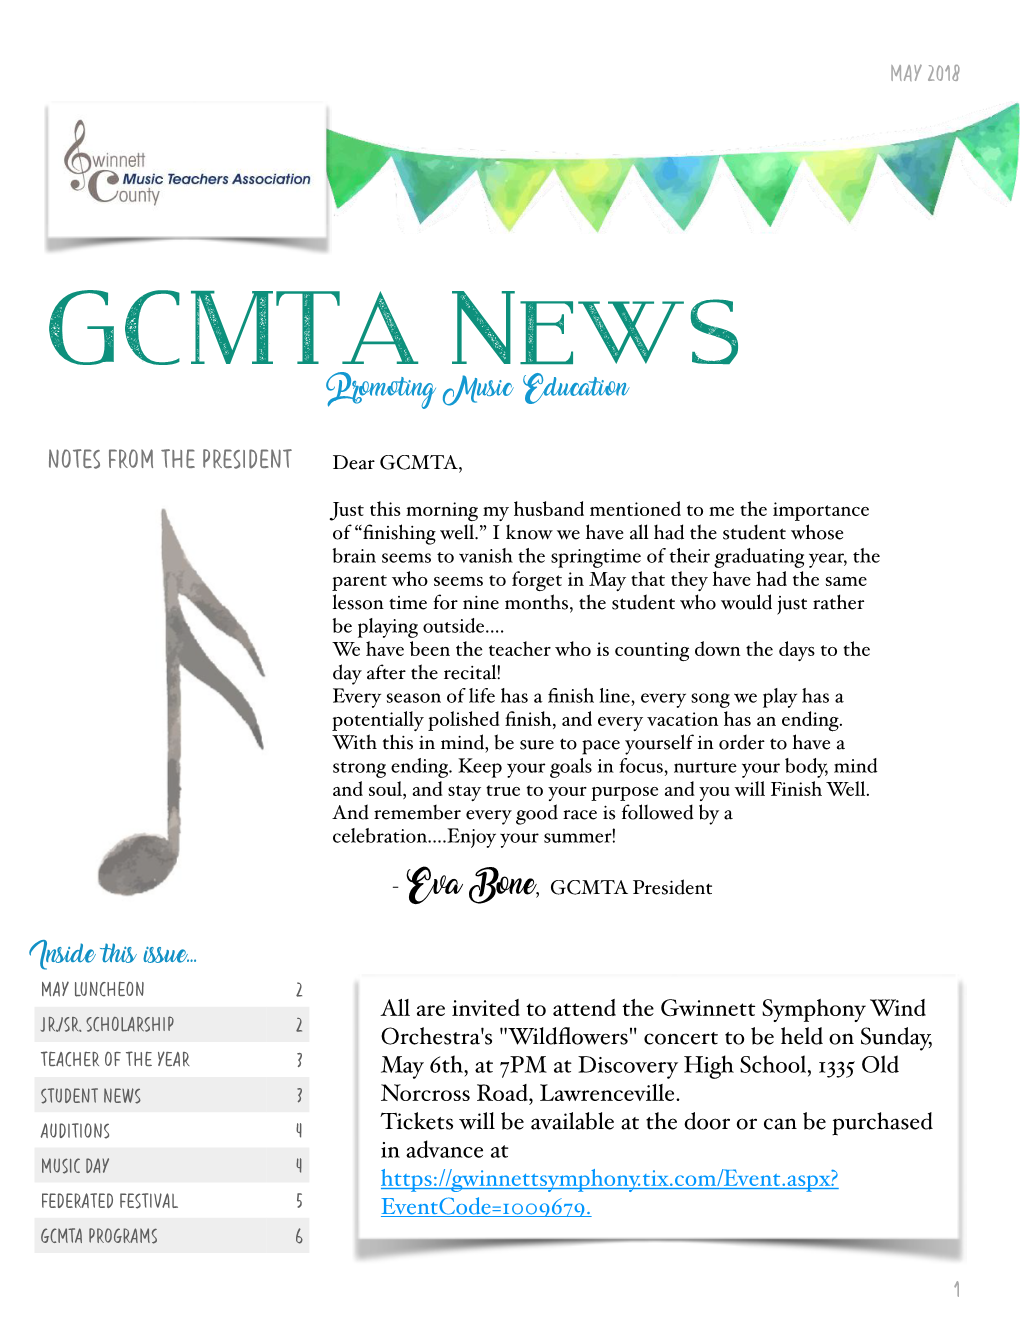 GCMTA News P Romoting Music Education